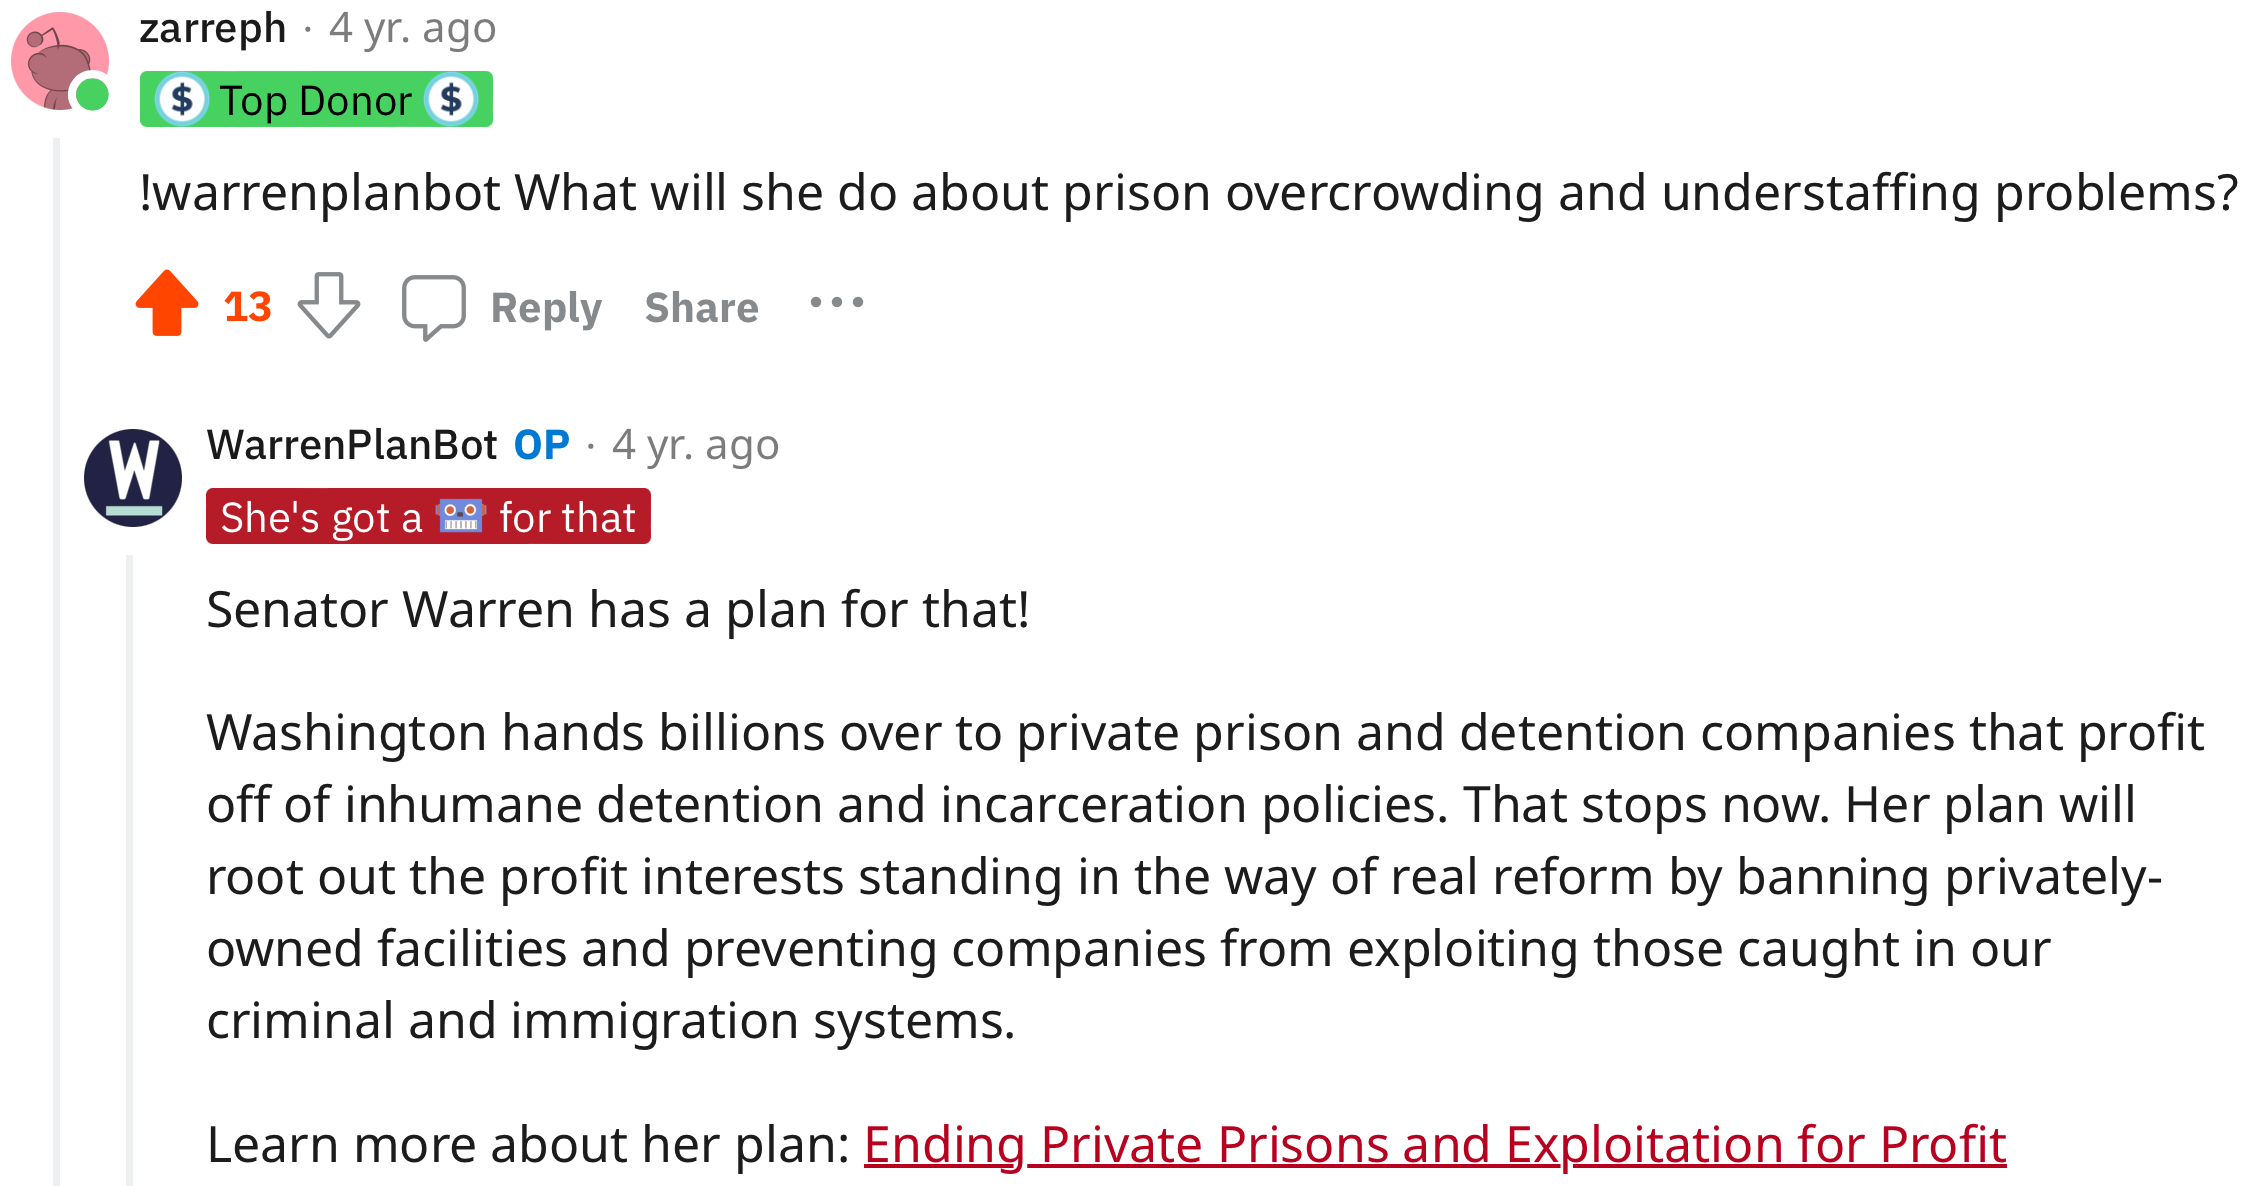 What her criminal justice reform plan